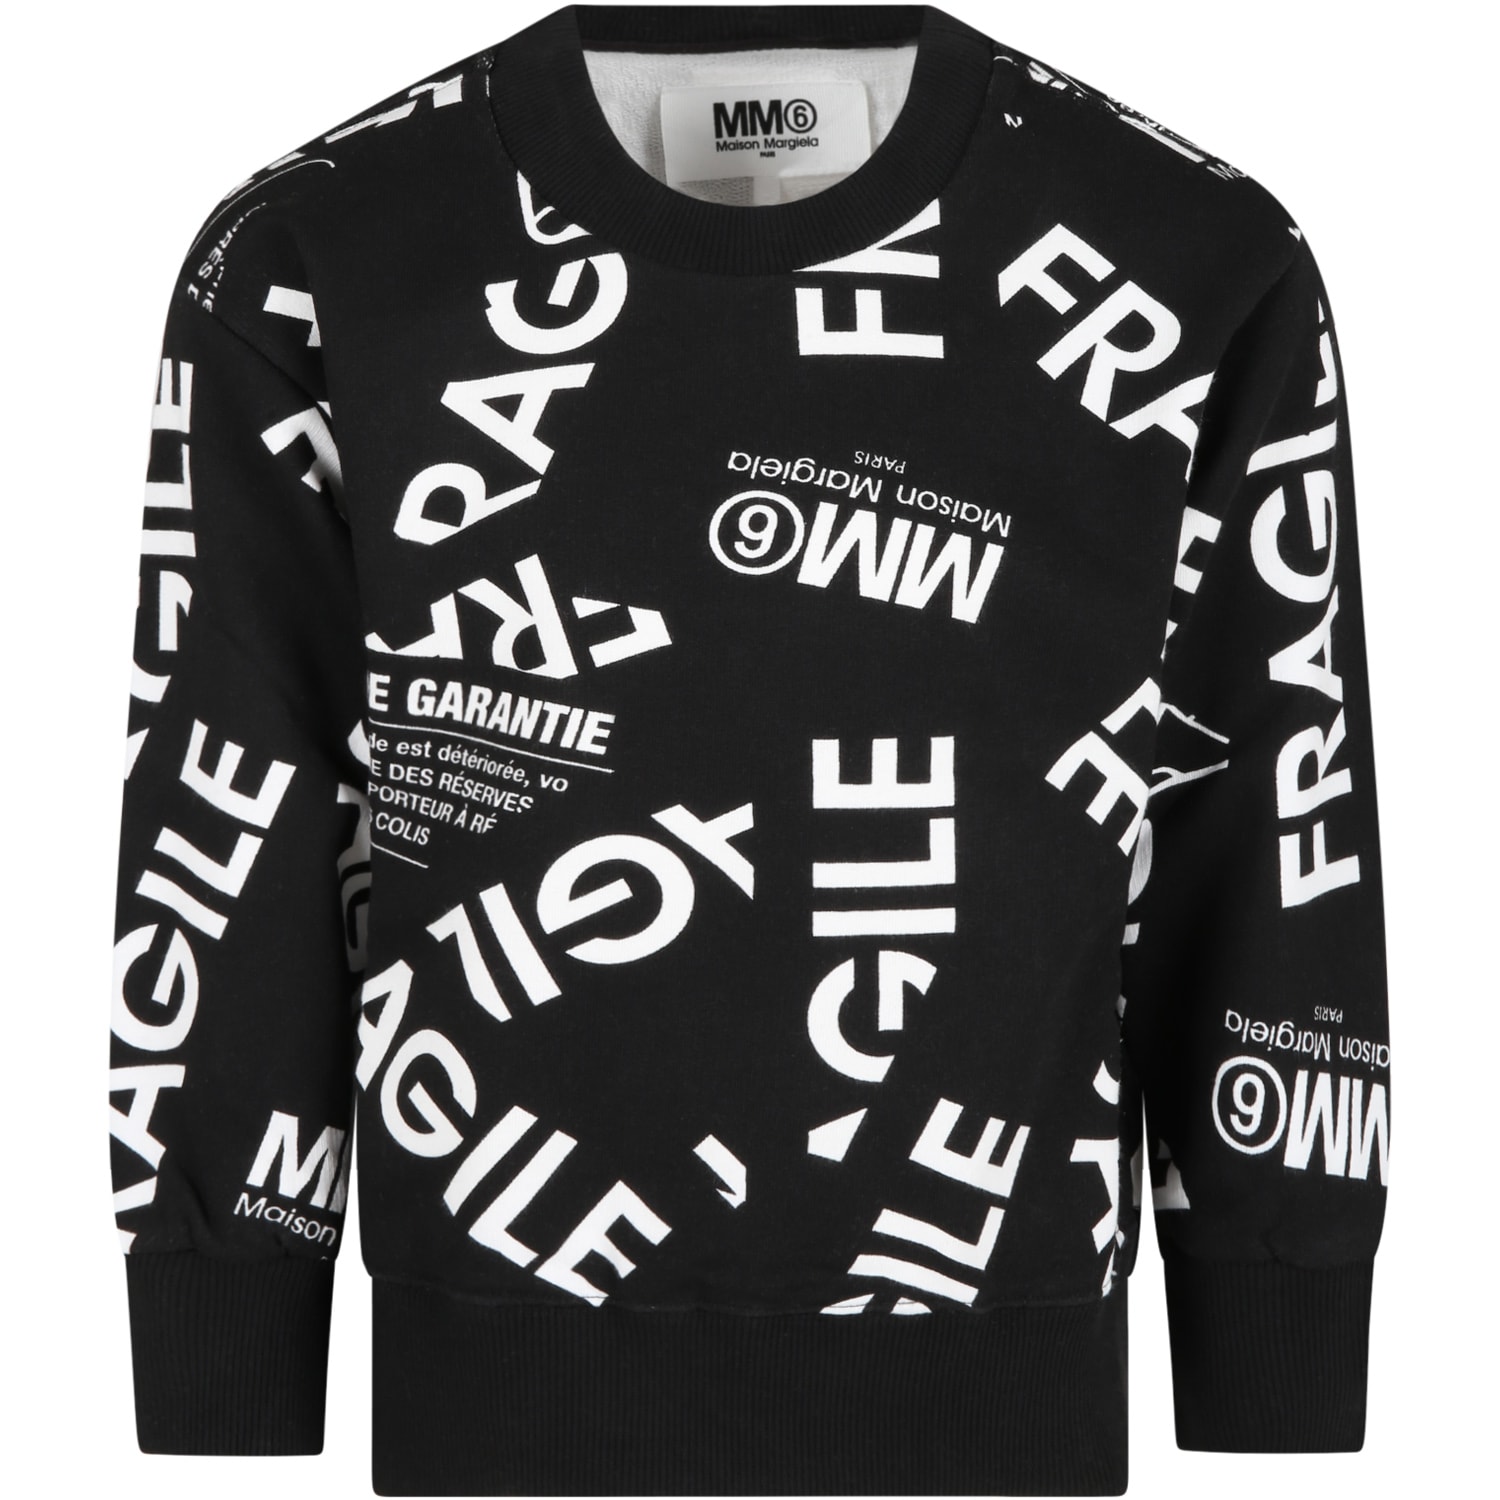 MM6 Maison Margiela Black Sweatshirt For Kids With Logos